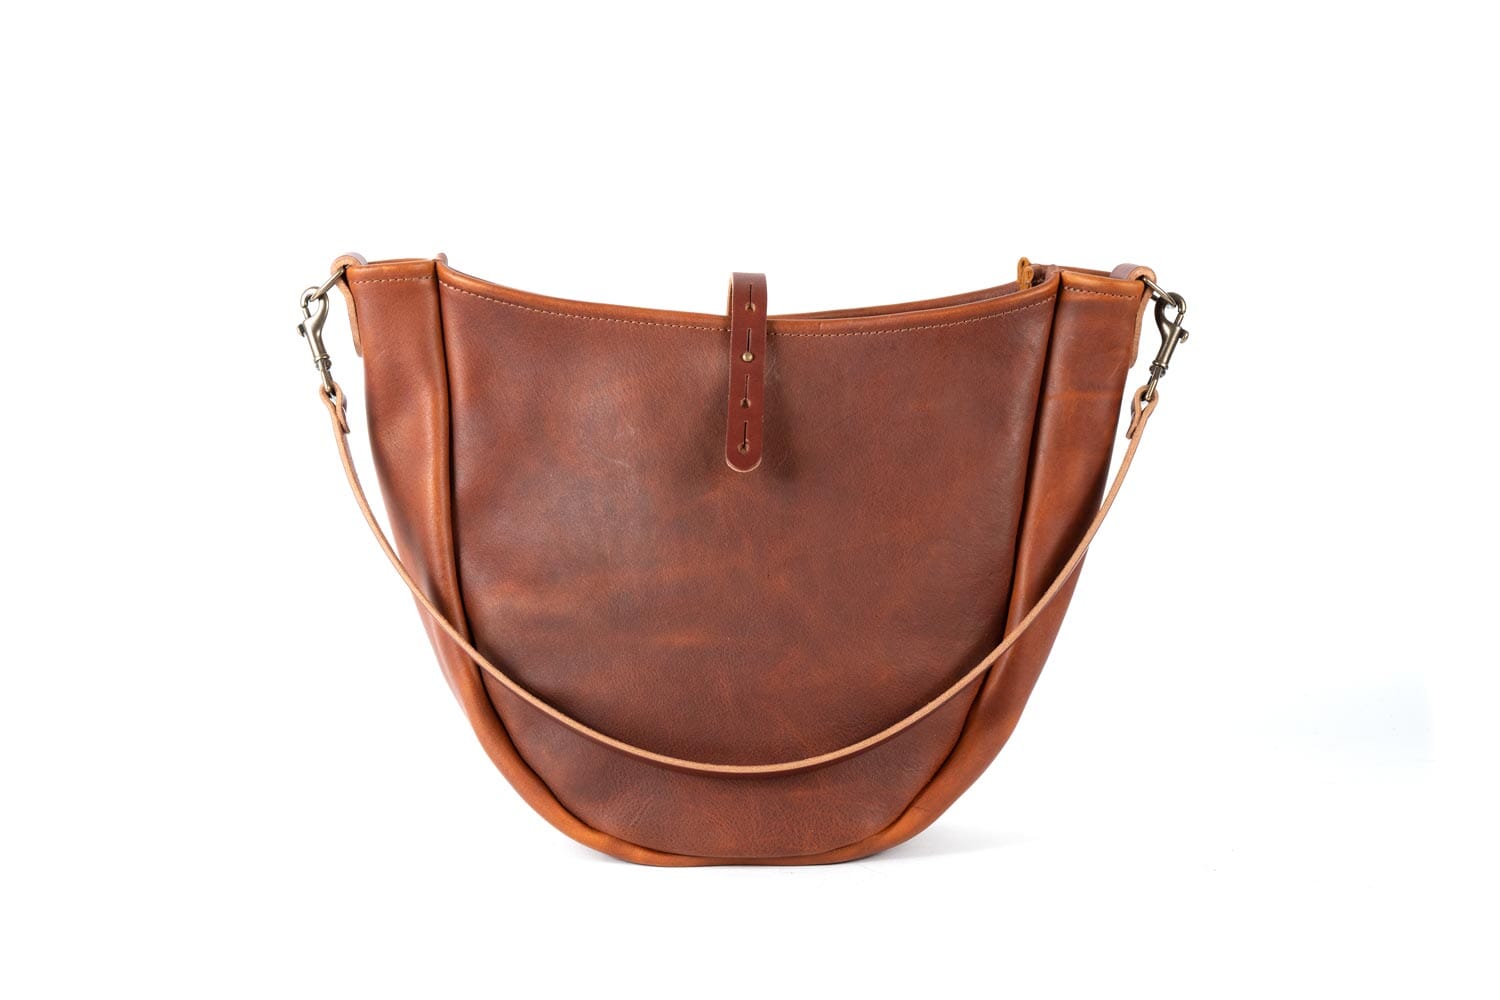 Celeste Leather Hobo Bag - Medium - Saddle